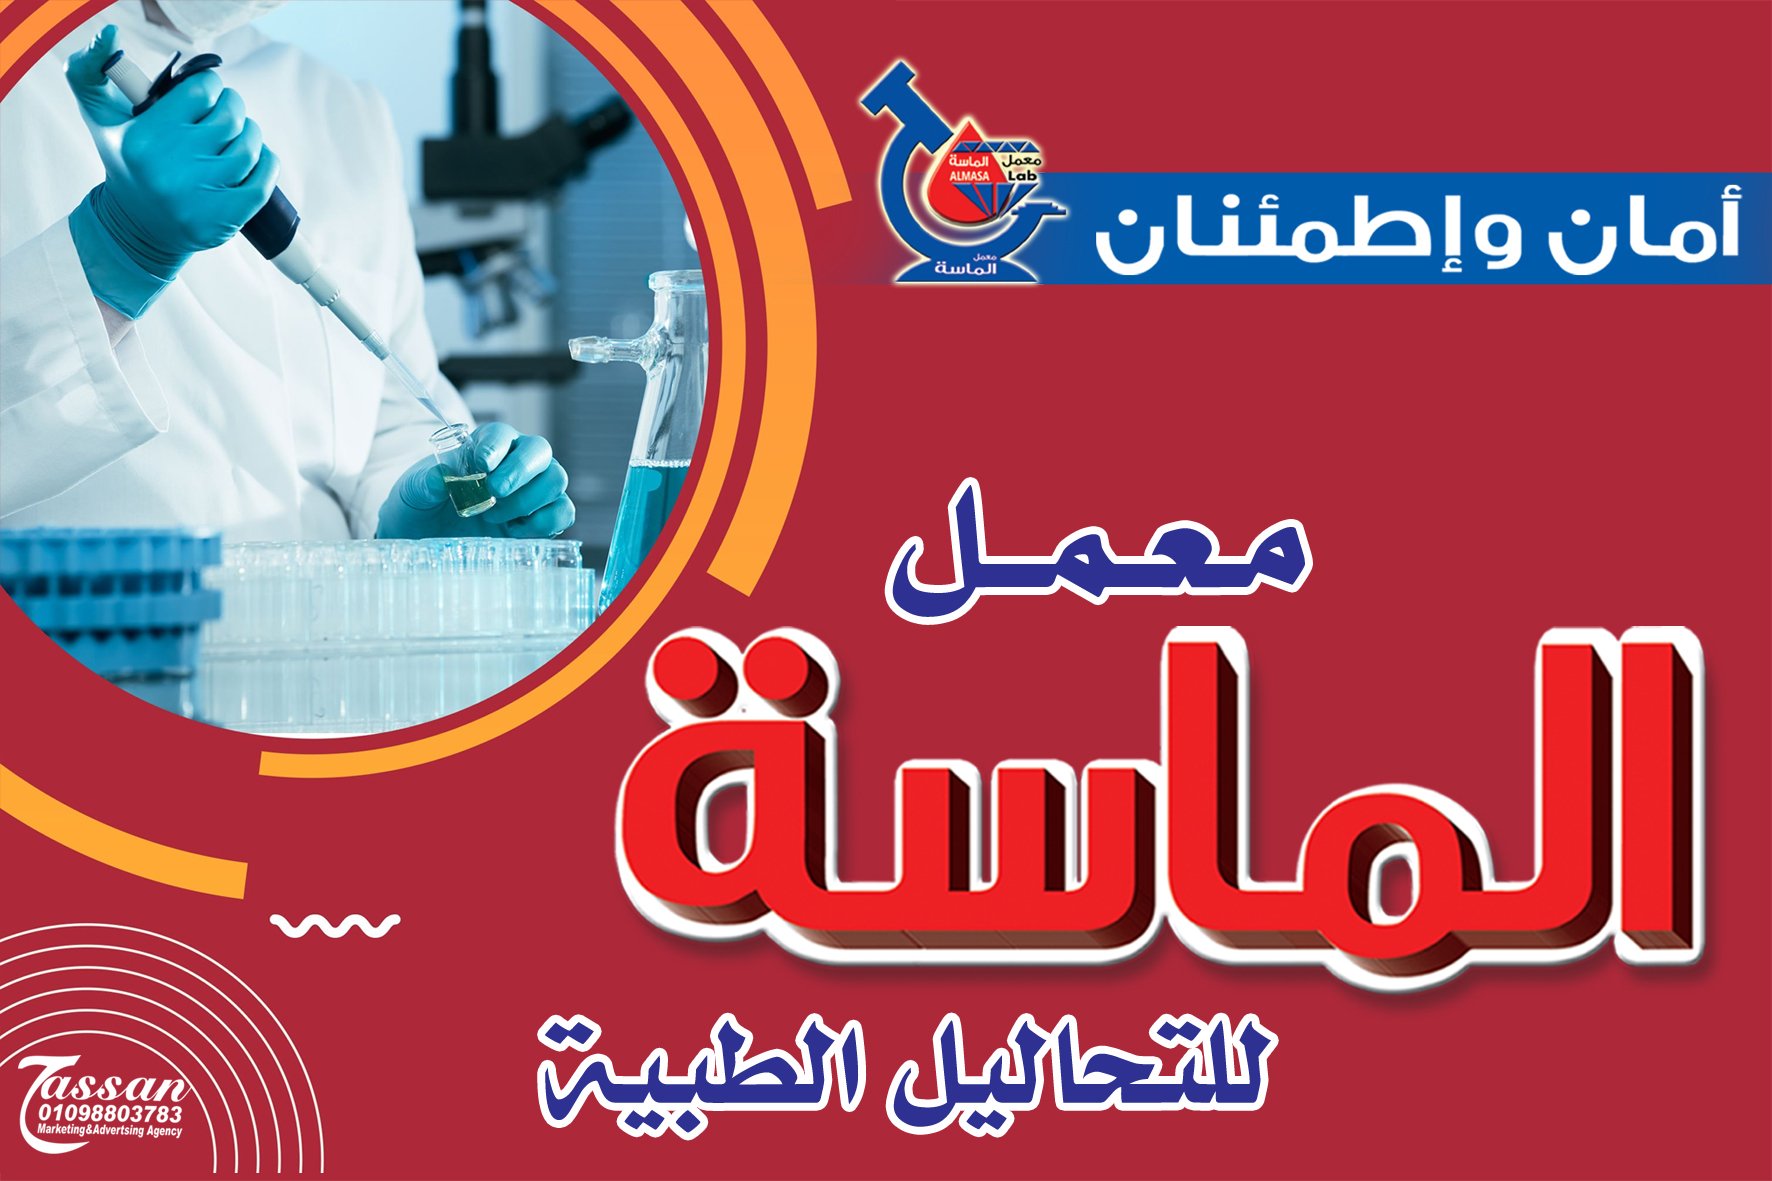 Al-Masa Medical Analysis Laboratory